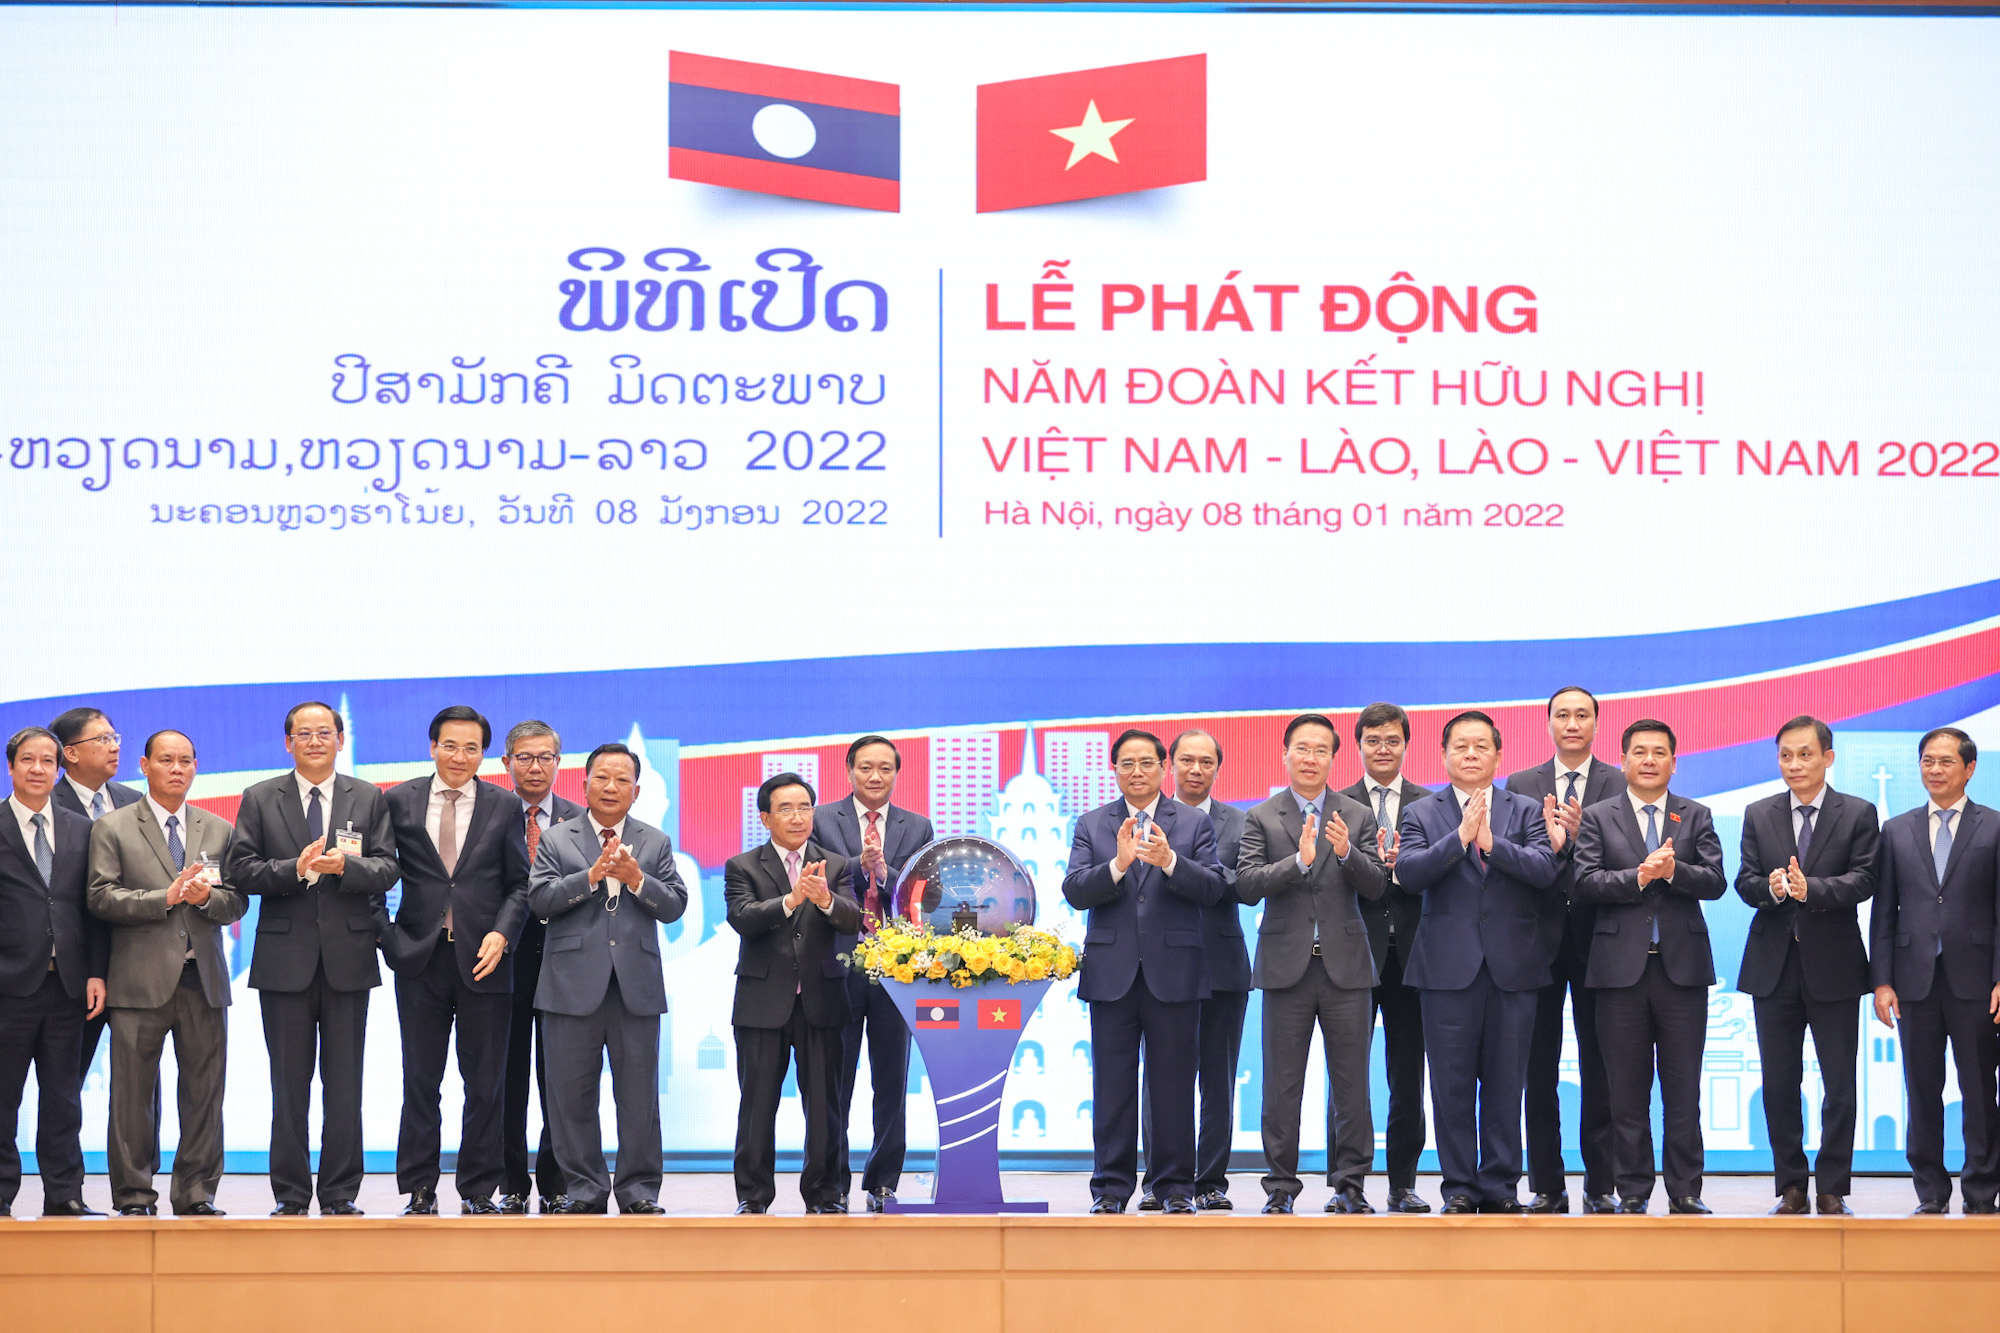 Viet Nam - Laos, Laos – Viet Nam Solidarity and Friendship Year launched - Viet Nam - Ảnh 1.